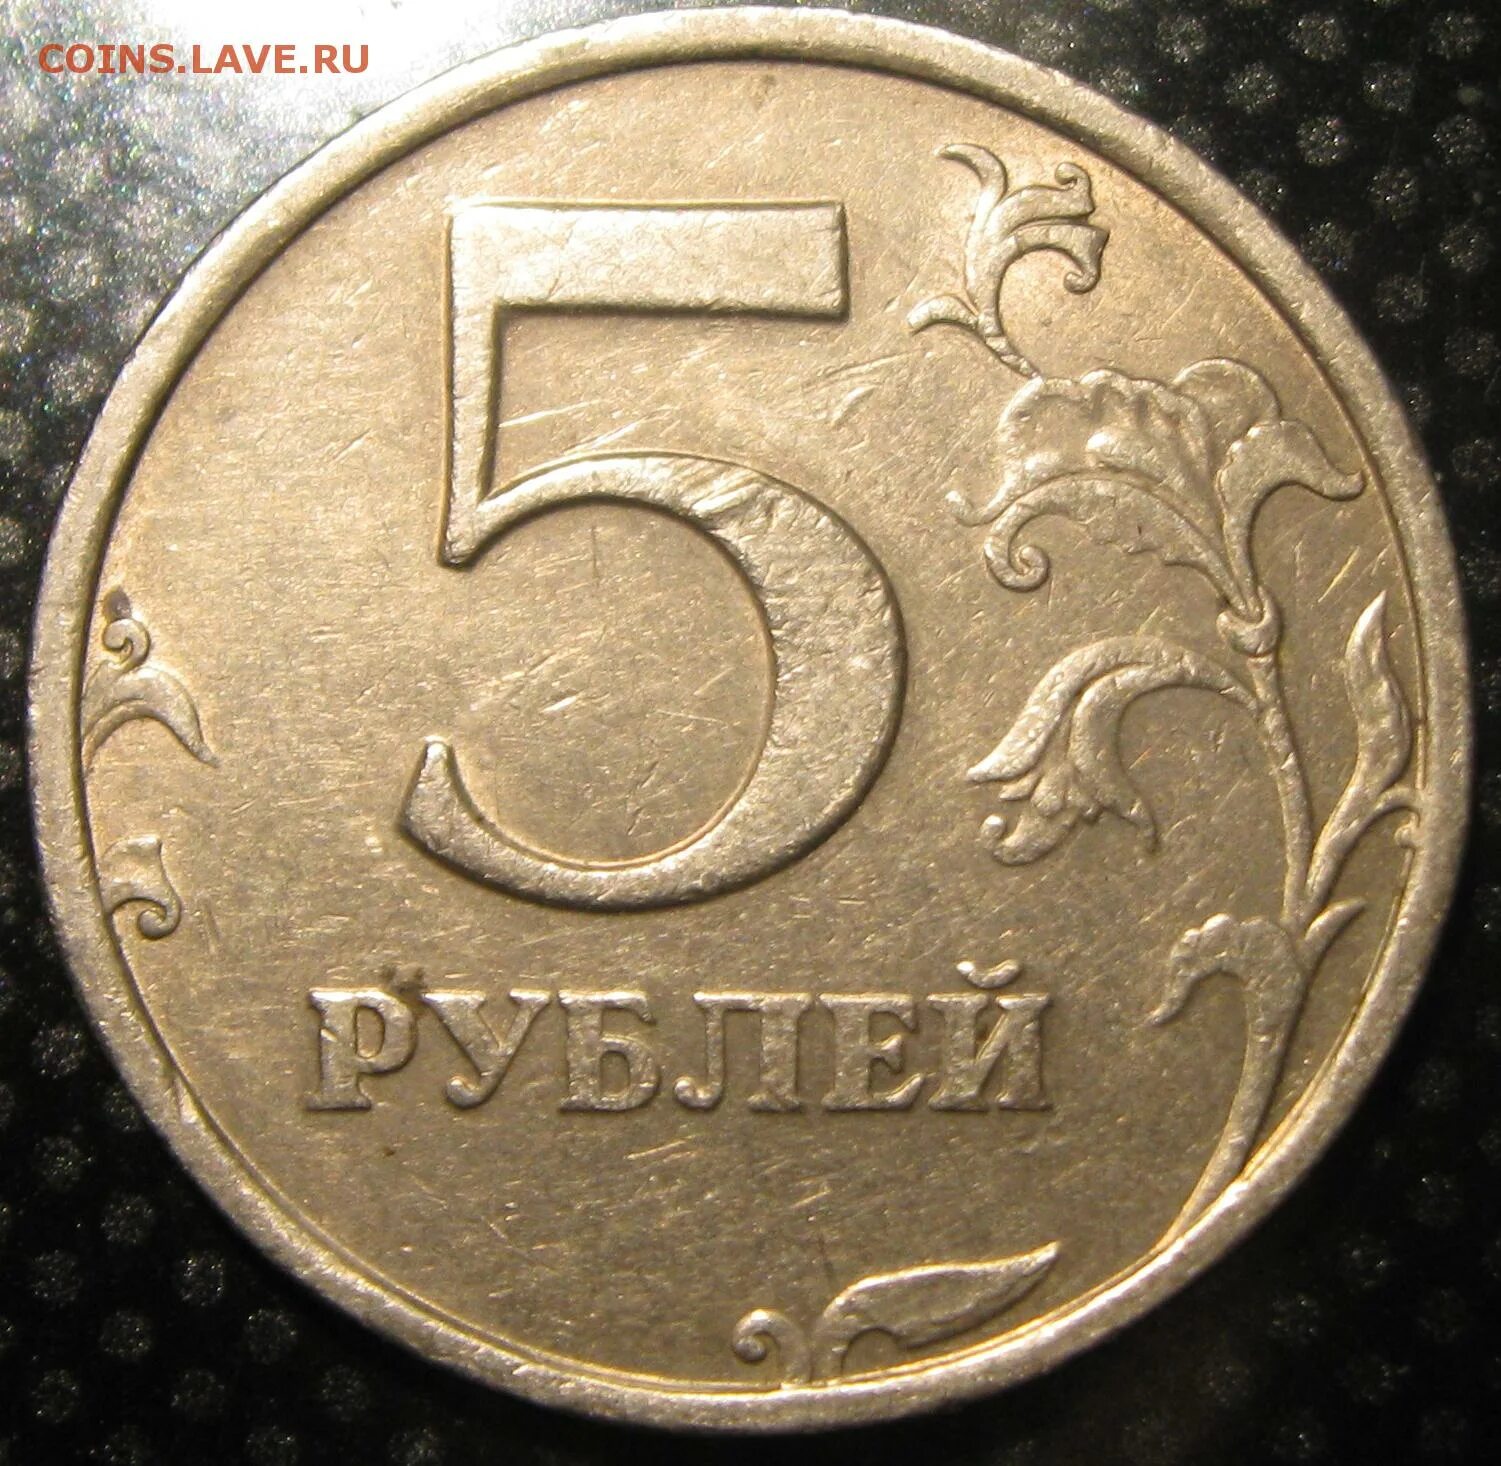 5 рублей ммд. Монета 5 рублей 2019. 5 Рублей 1997 СПМД. 5 Рублей 1997 года. 5 Рублей 2008 редкие разновидности.